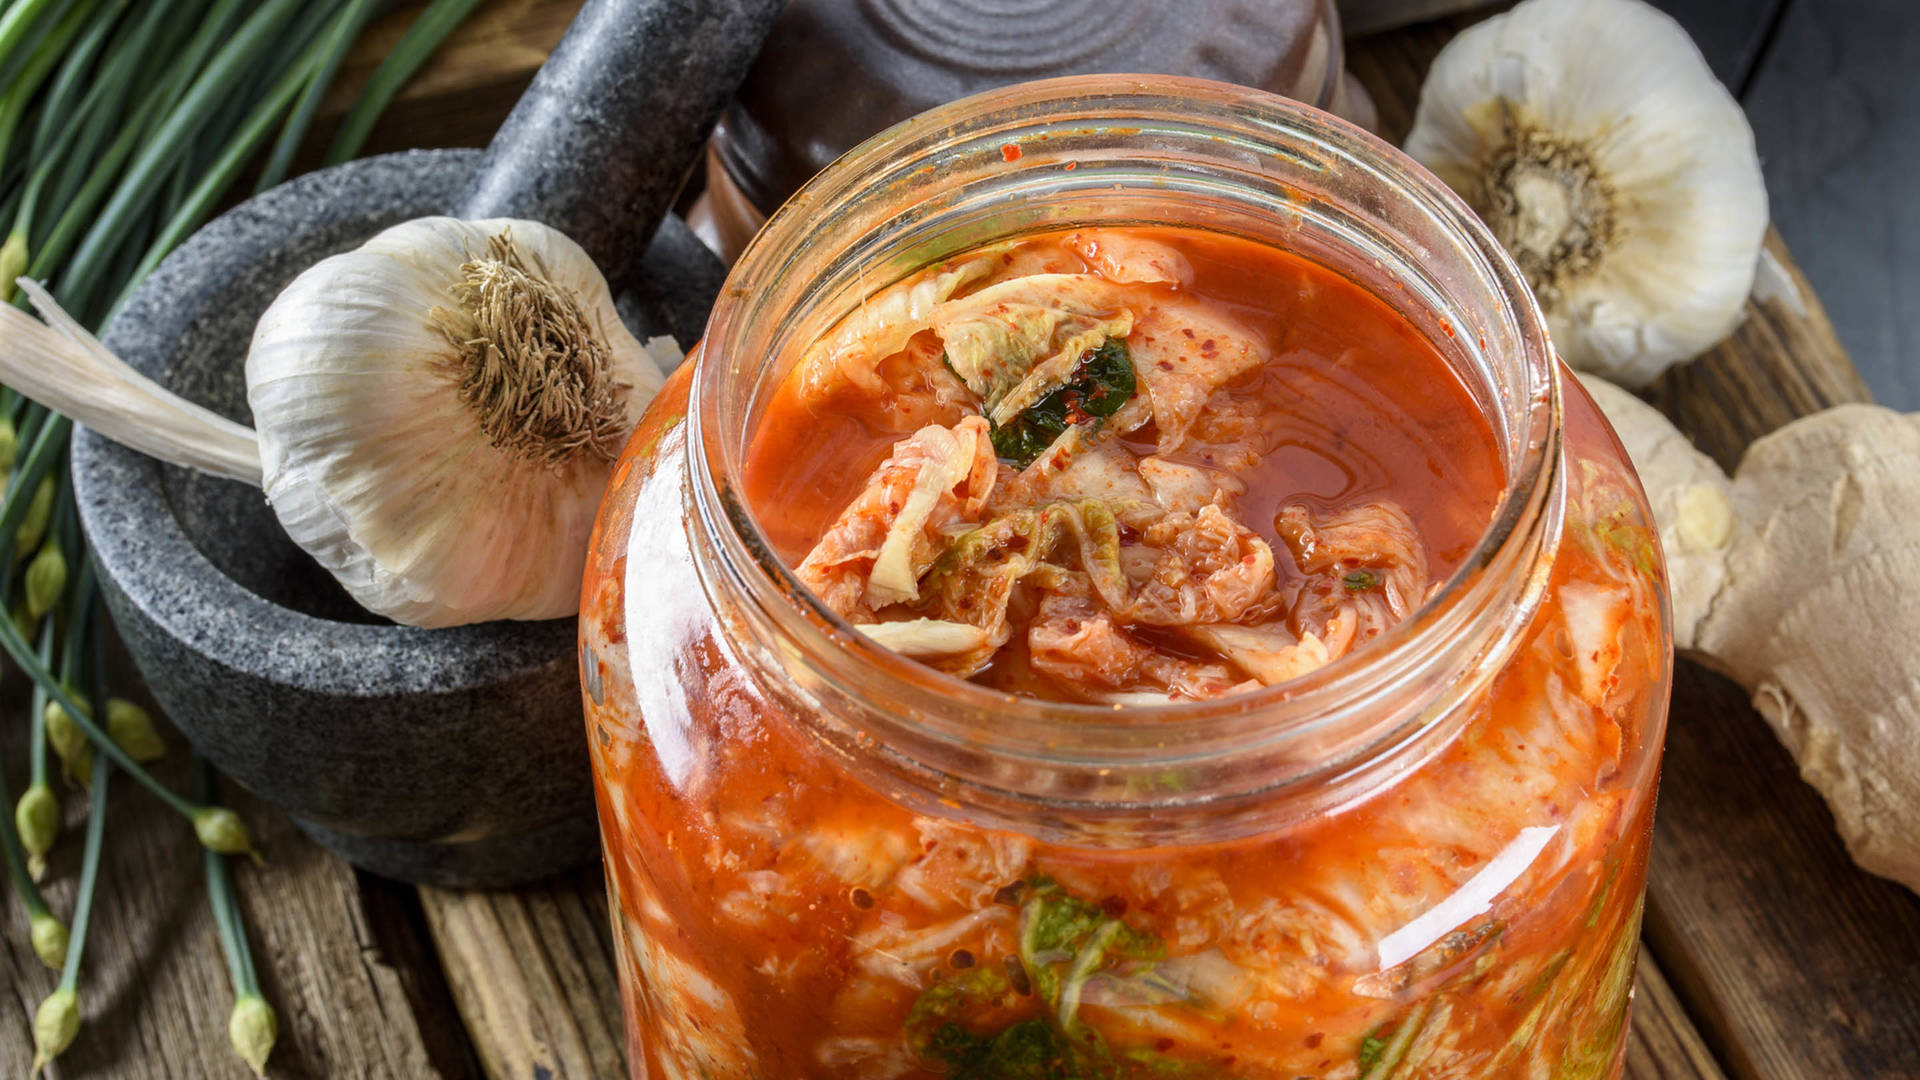 kimchi 2019 food trends